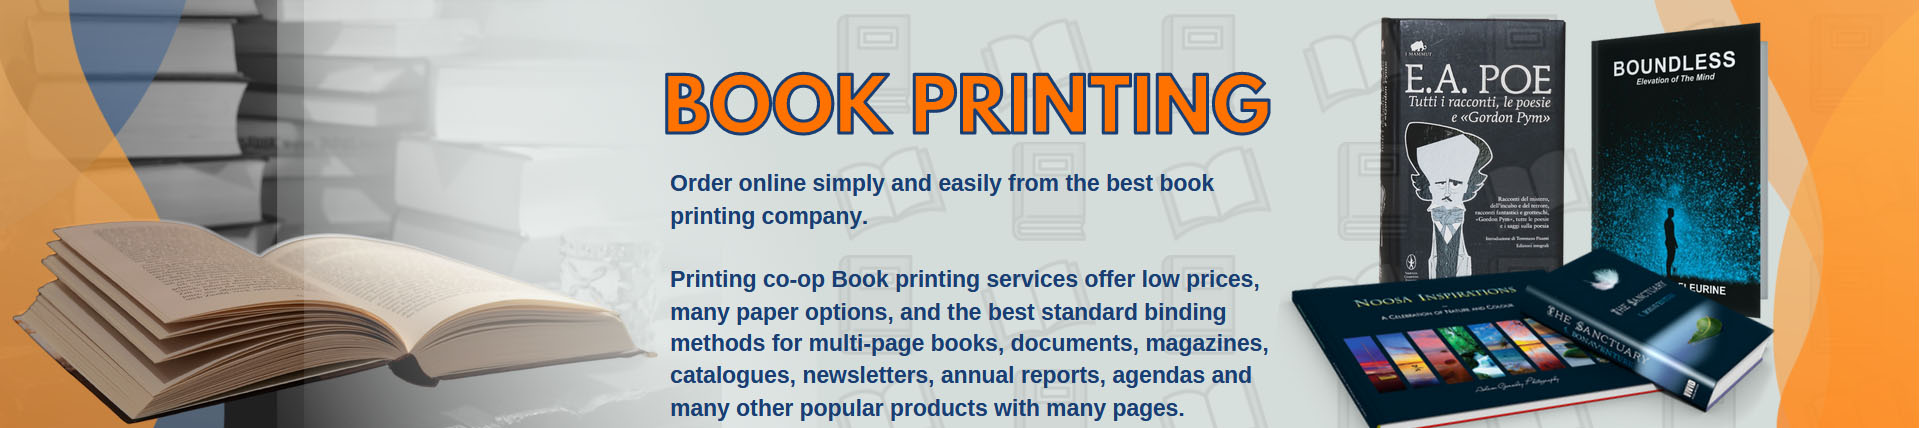 book_printing.jpg